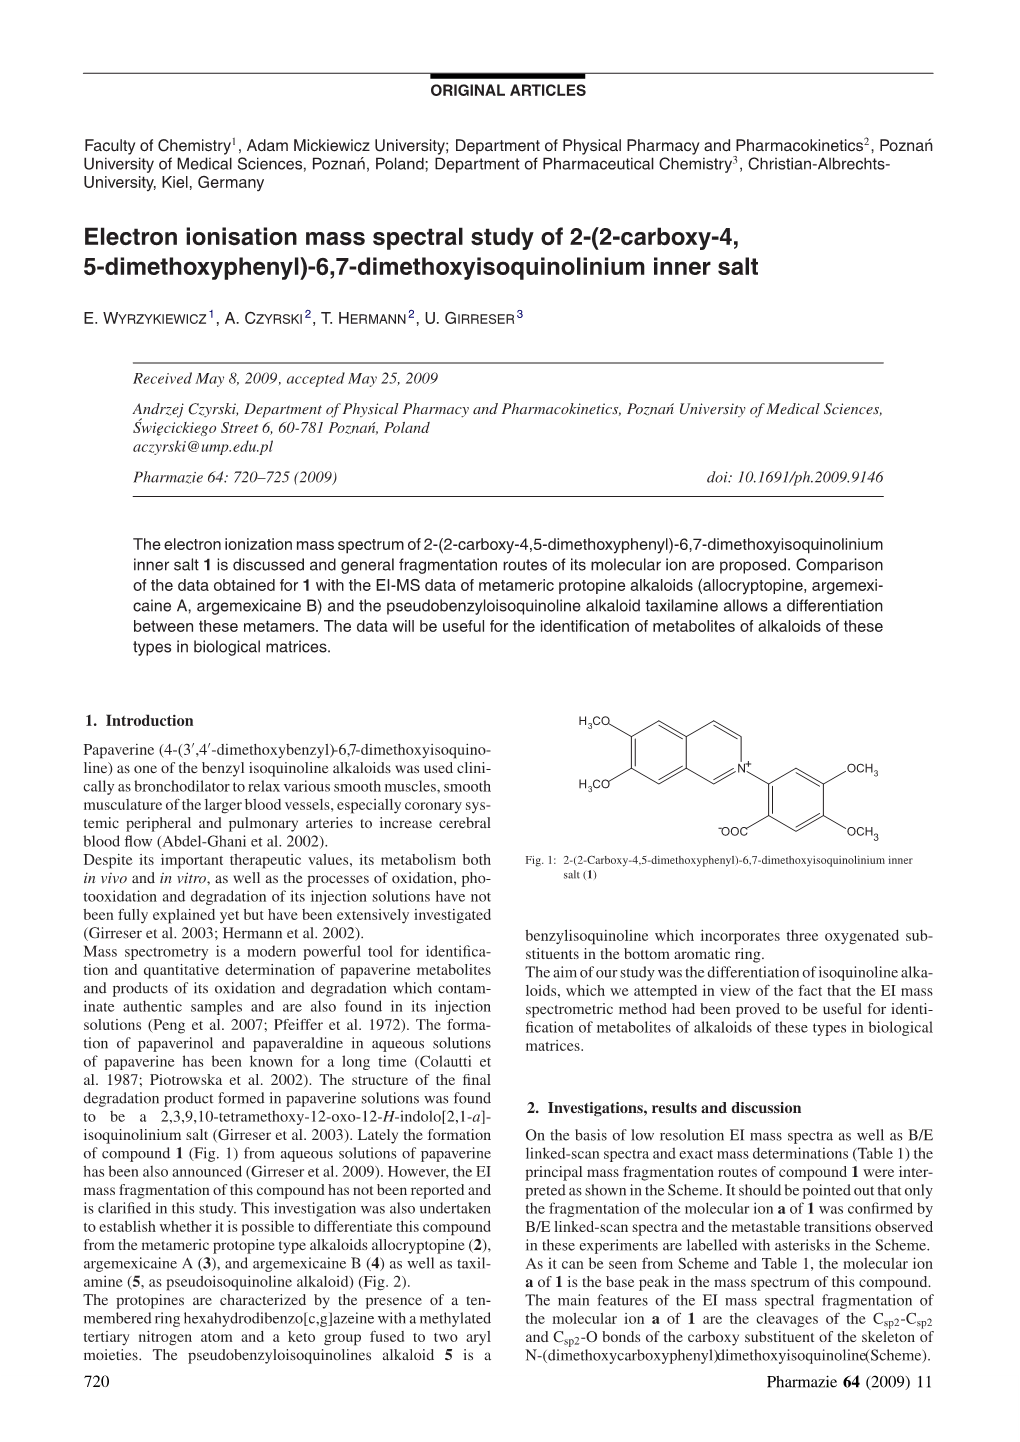 Electron Ionisation Mass Spectral Study of 2-(2-Carboxy-4, 5-Dimethoxyphenyl)-6,7-Dimethoxyisoquinolinium Inner Salt